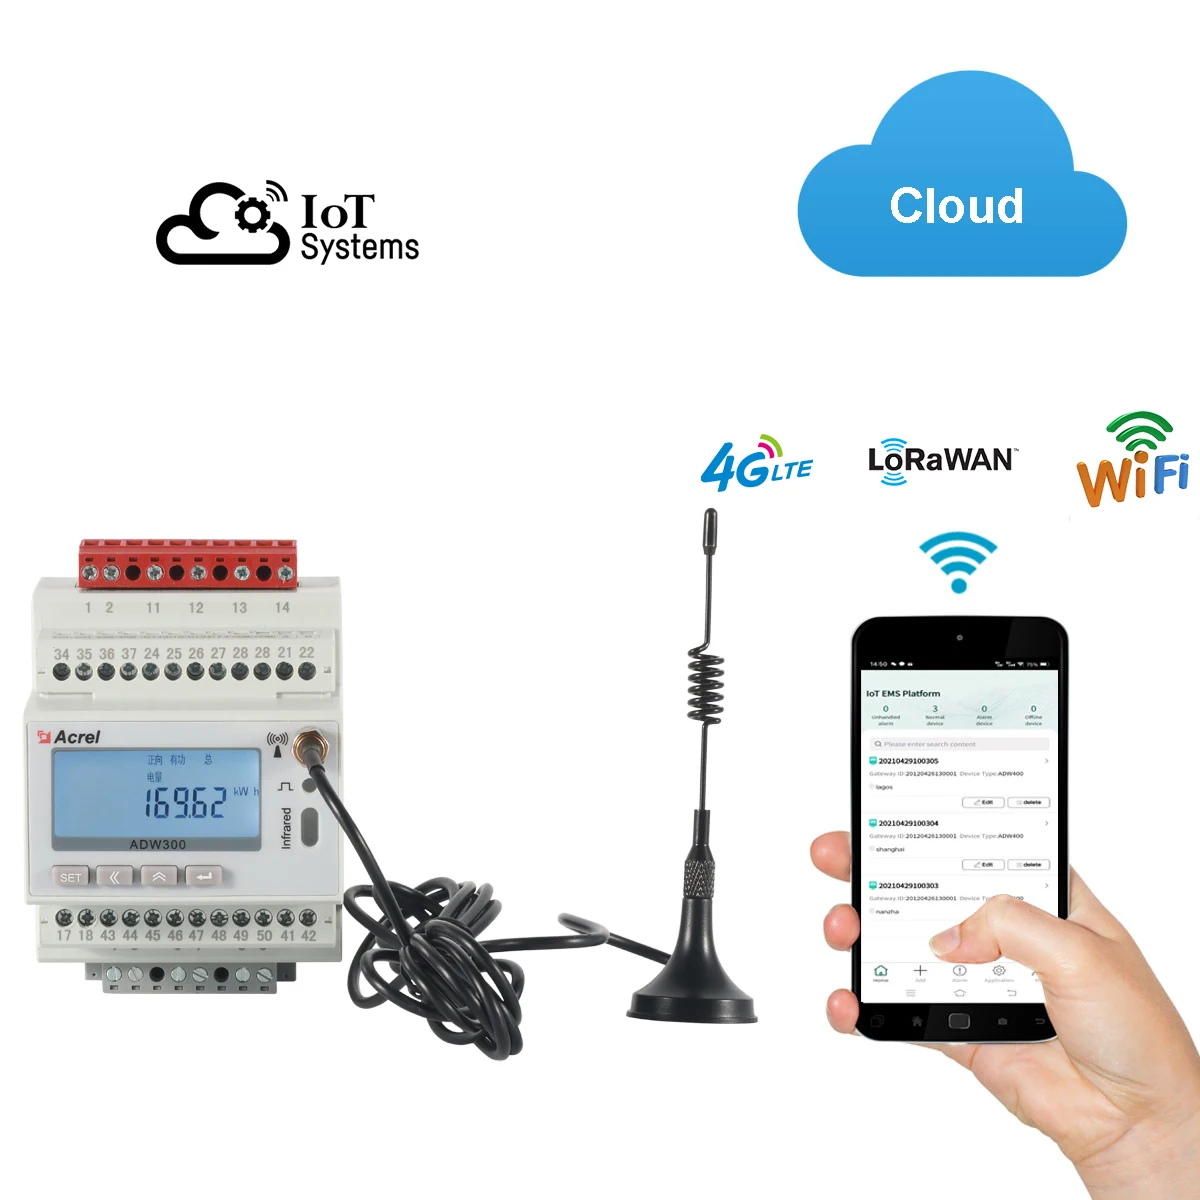 

Acrel 4G Wifi Lorawan IOT Wireless Smart Three Phase Energy Meter Rs485 Modbus-RTU MQTT Power Consumption Online Monitoring